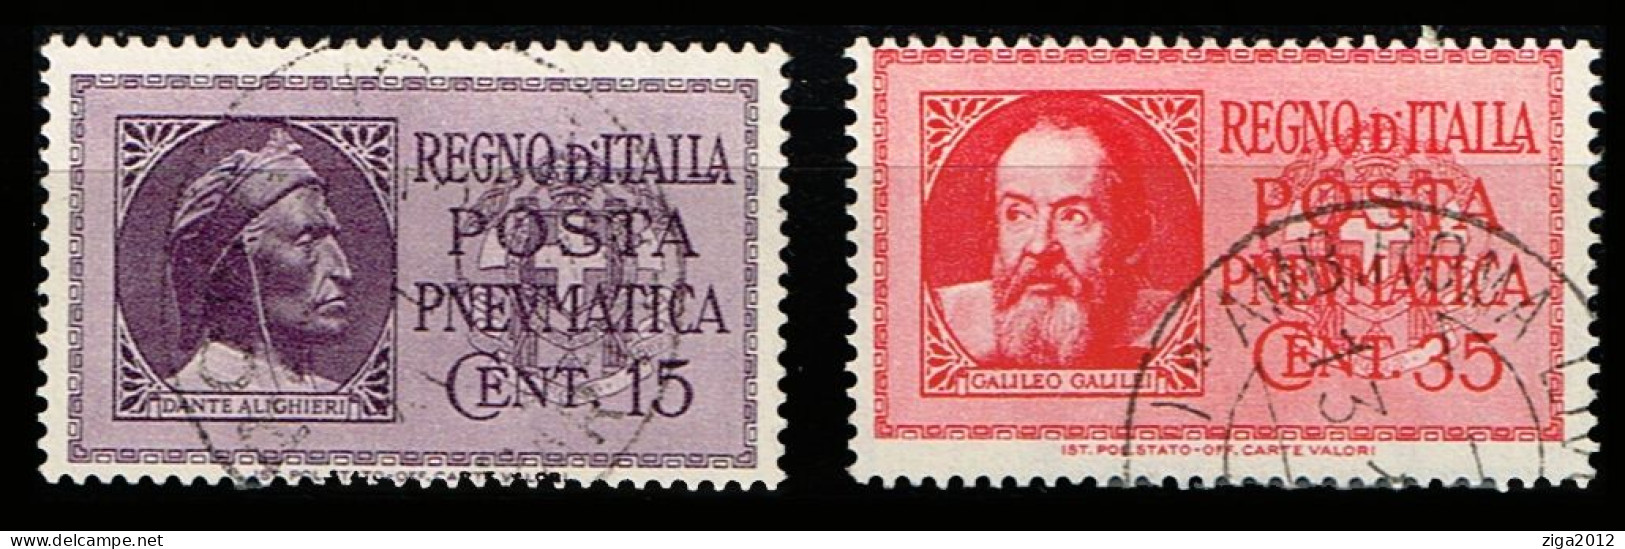 ITALY 1933 SERIE COMPLETA DEI FRANCOBOLLI DI POSTA PNEUMATICA - ANNULLATI - Pneumatic Mail